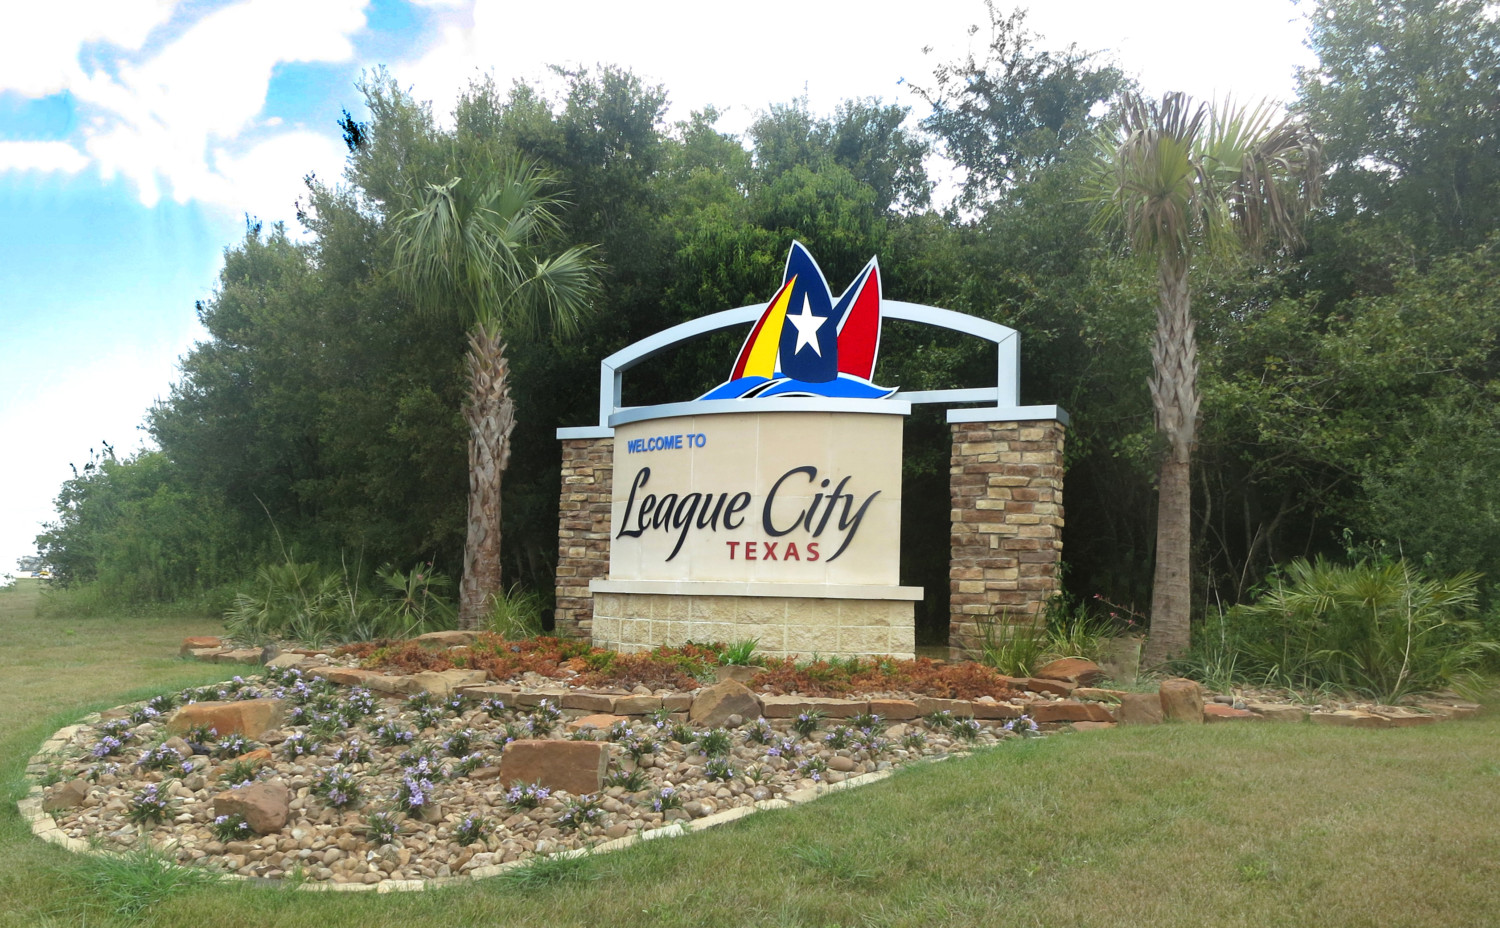 League City Texas welcome sign